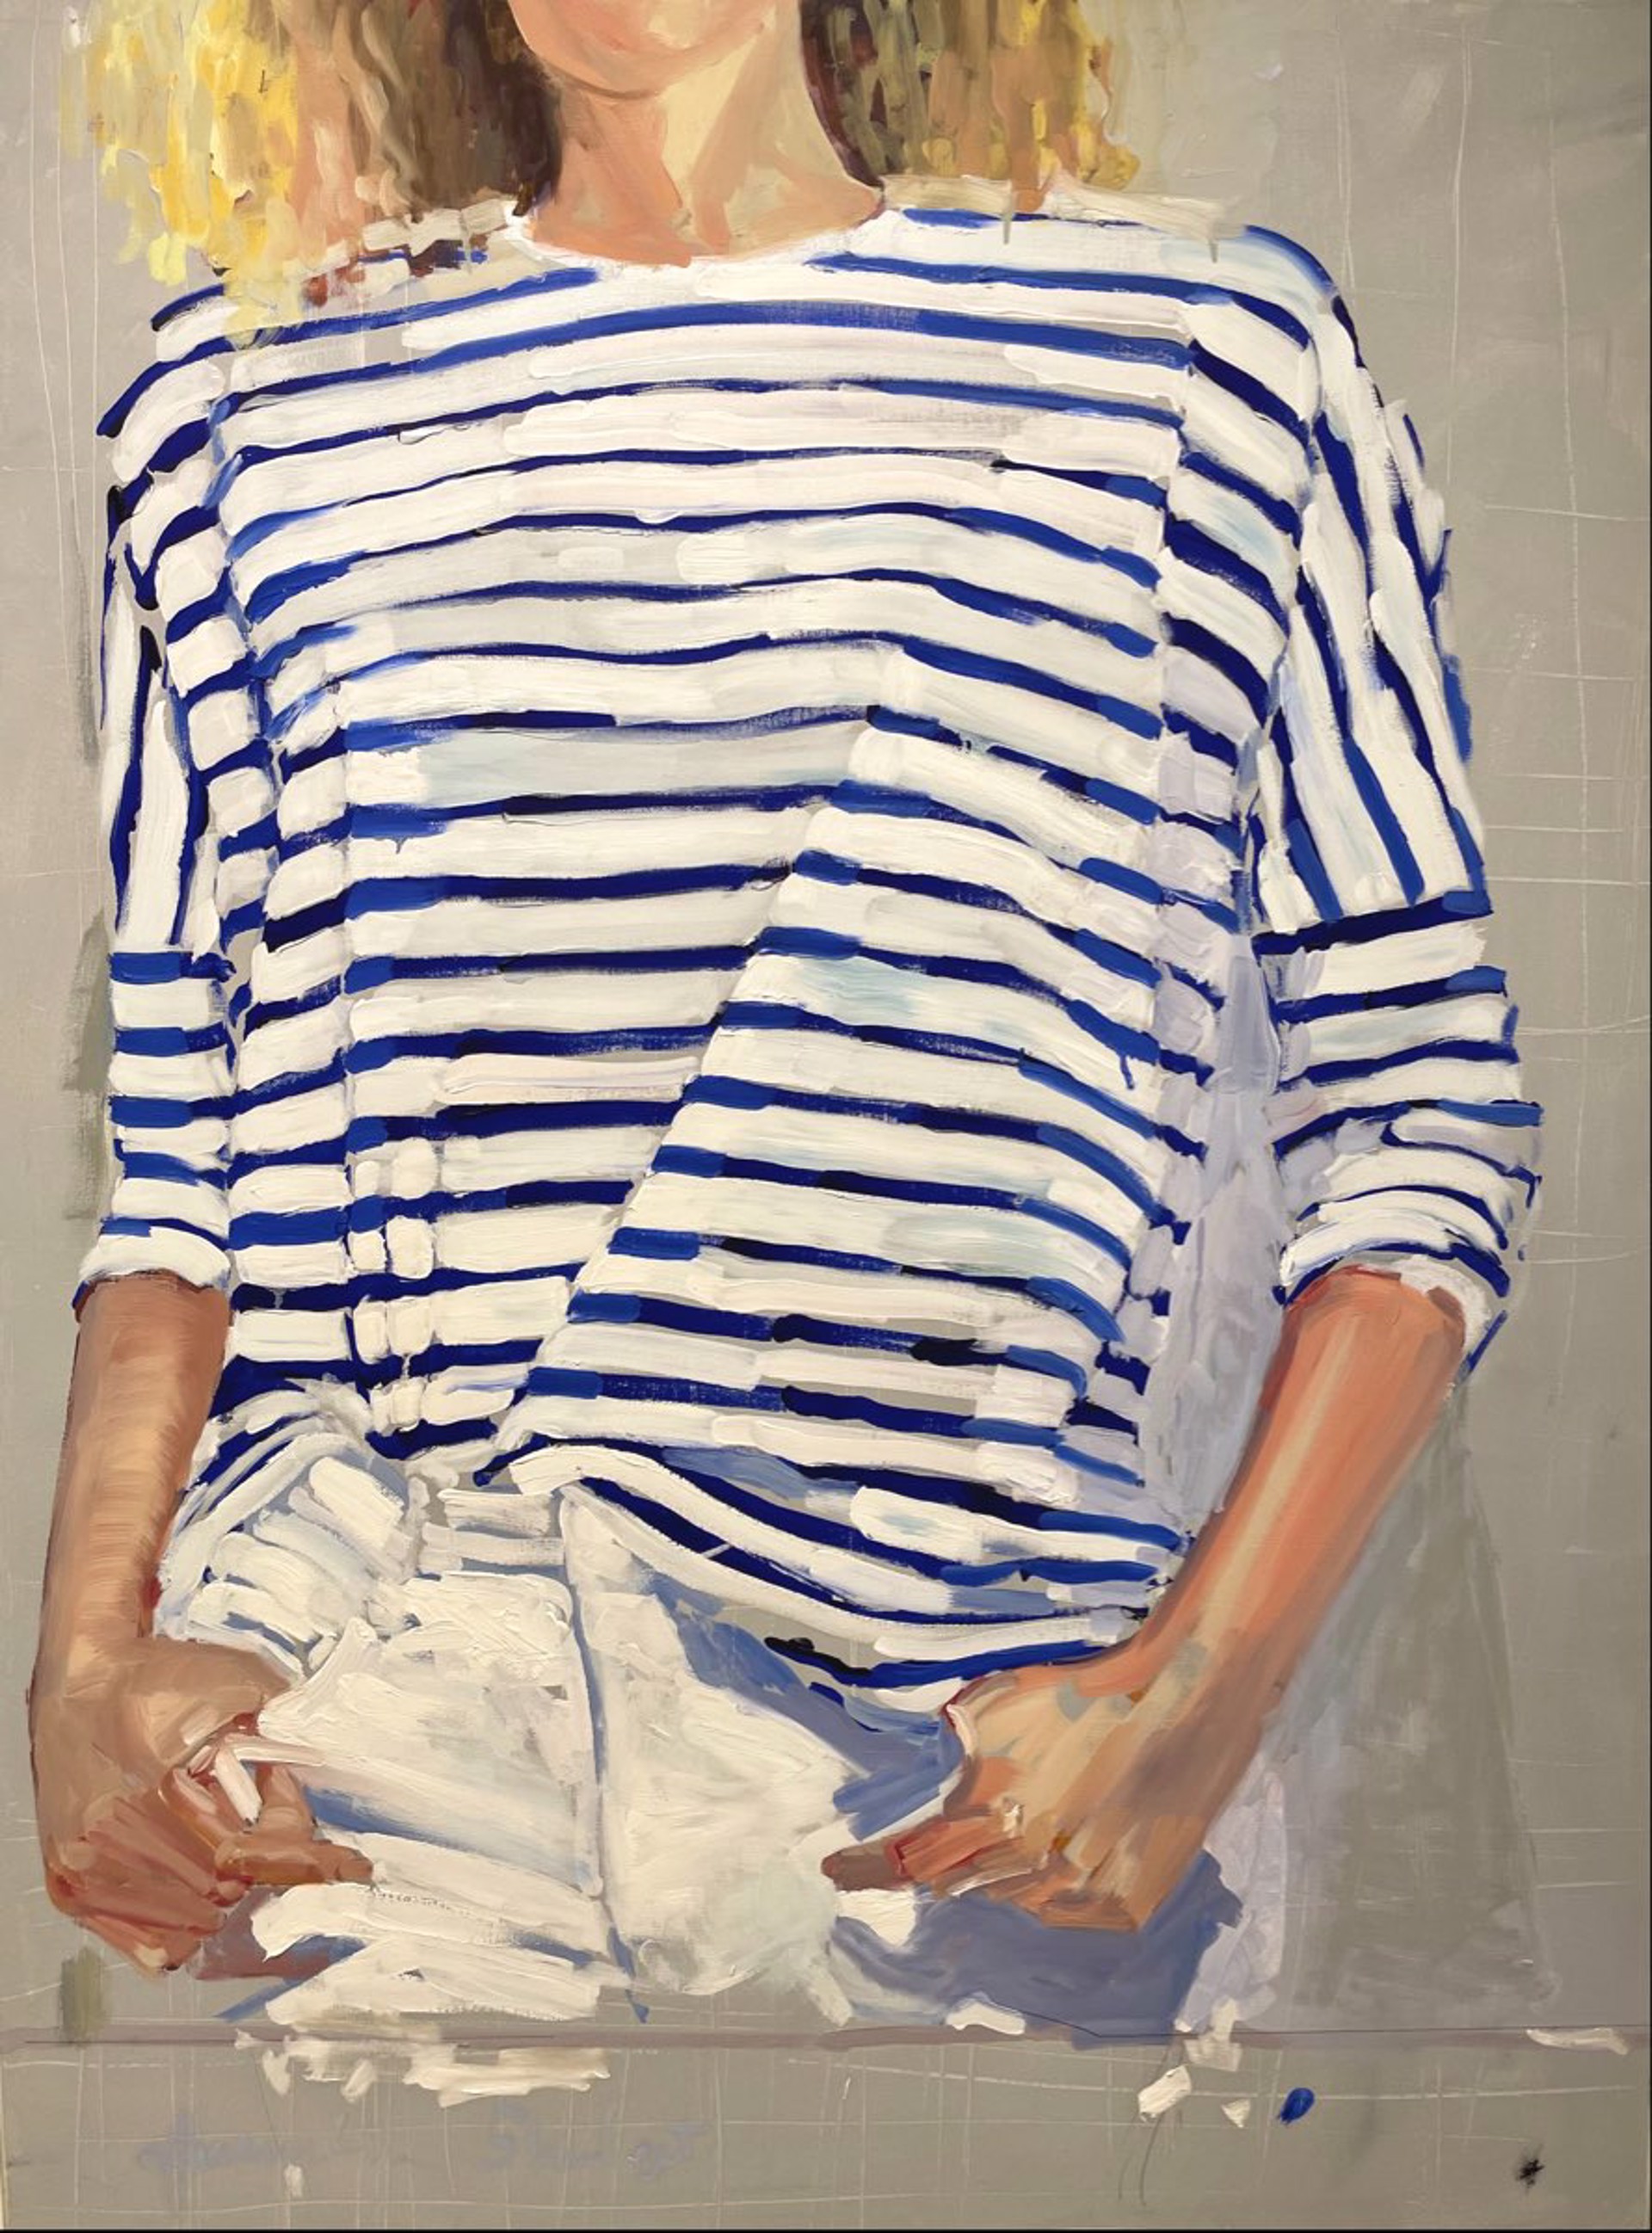 Blue Striped Shirt by Laura Lacambra Shubert